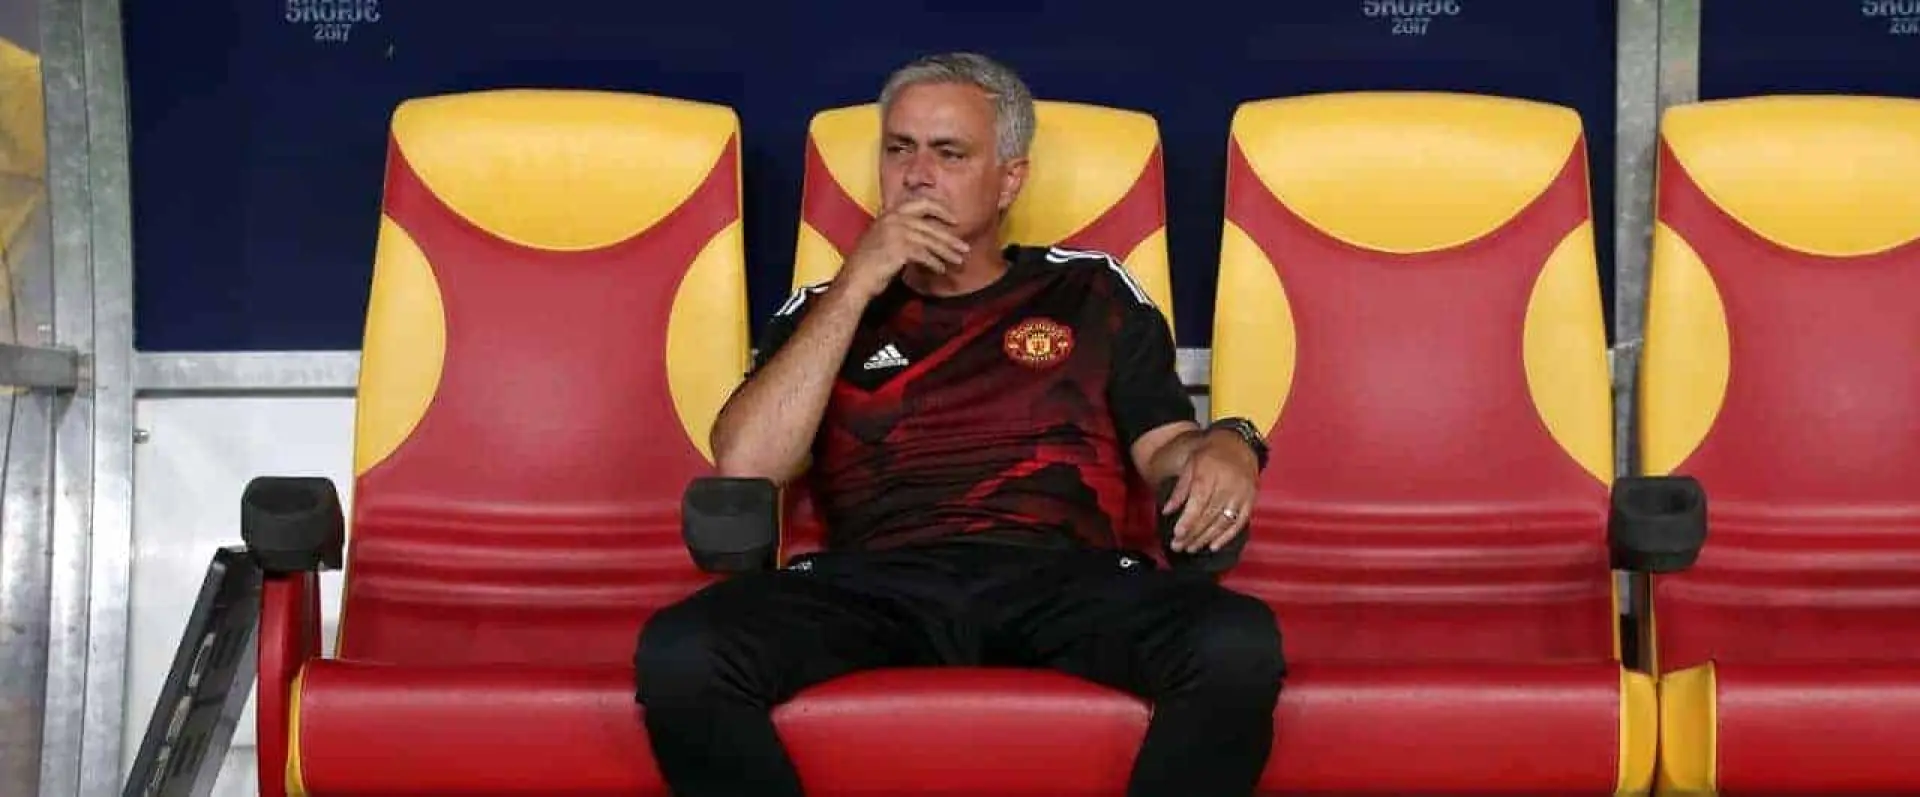 Jose Mourinho Man United odds